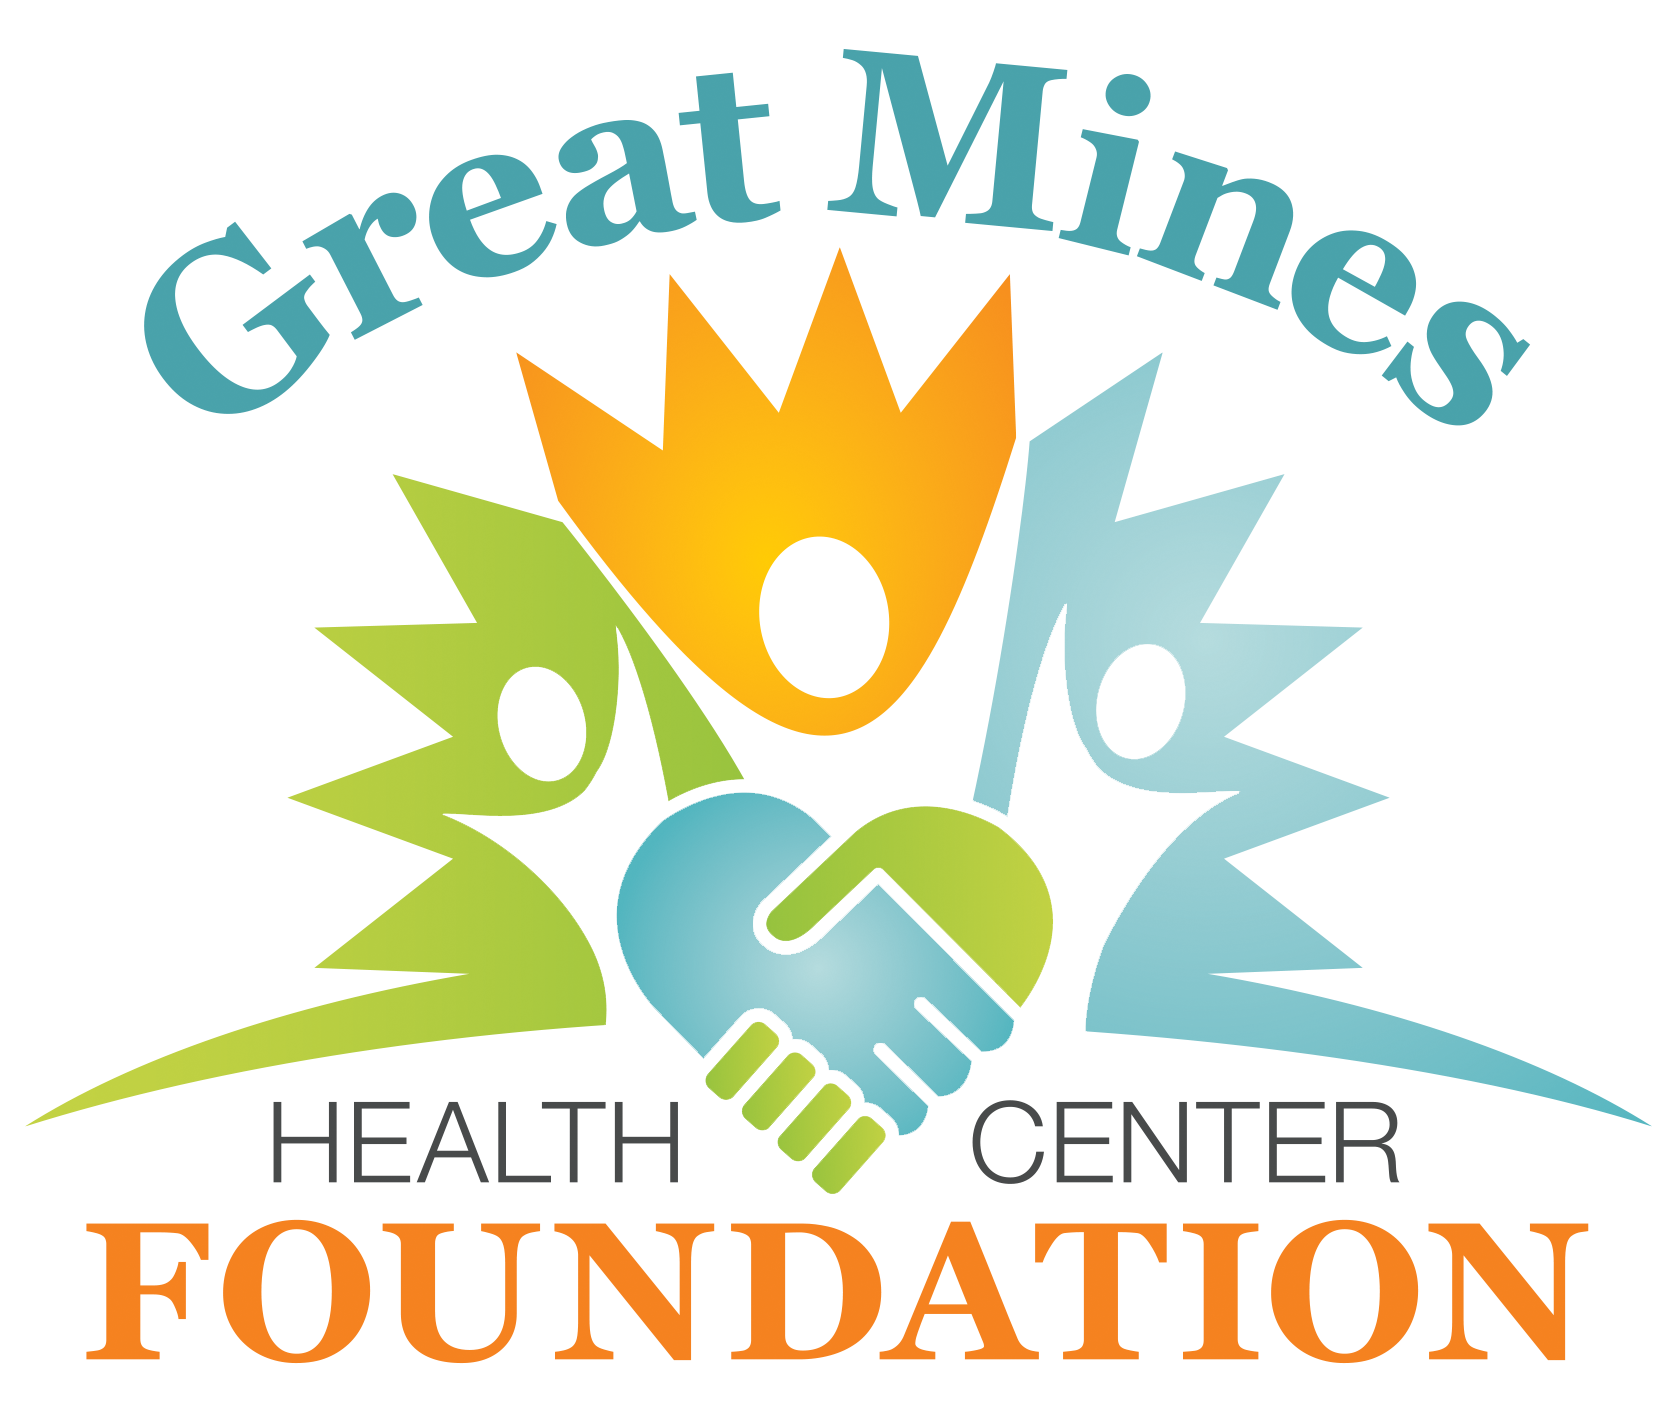 Great Mines Health Center Foundation Logo